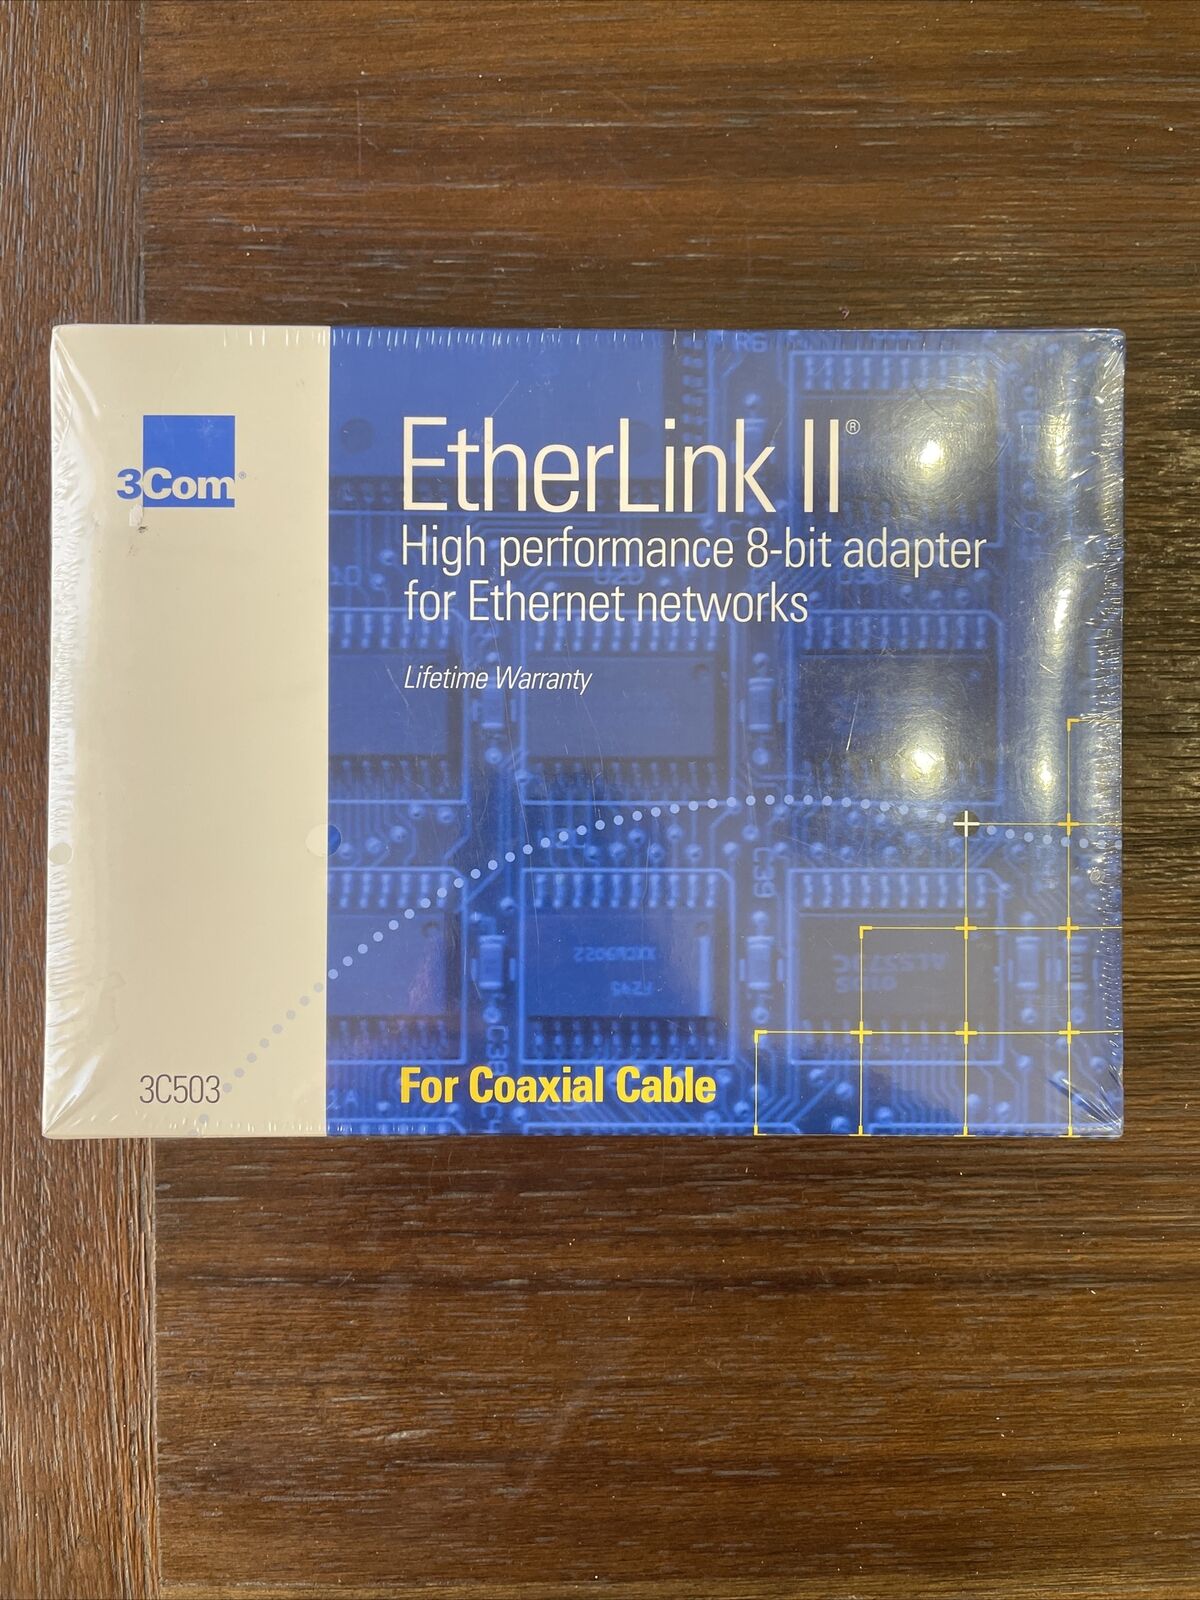 3Com EtherLink II High Performance 8-bit Adapter 3C503 BRAND NEW IN BOX Ethernet